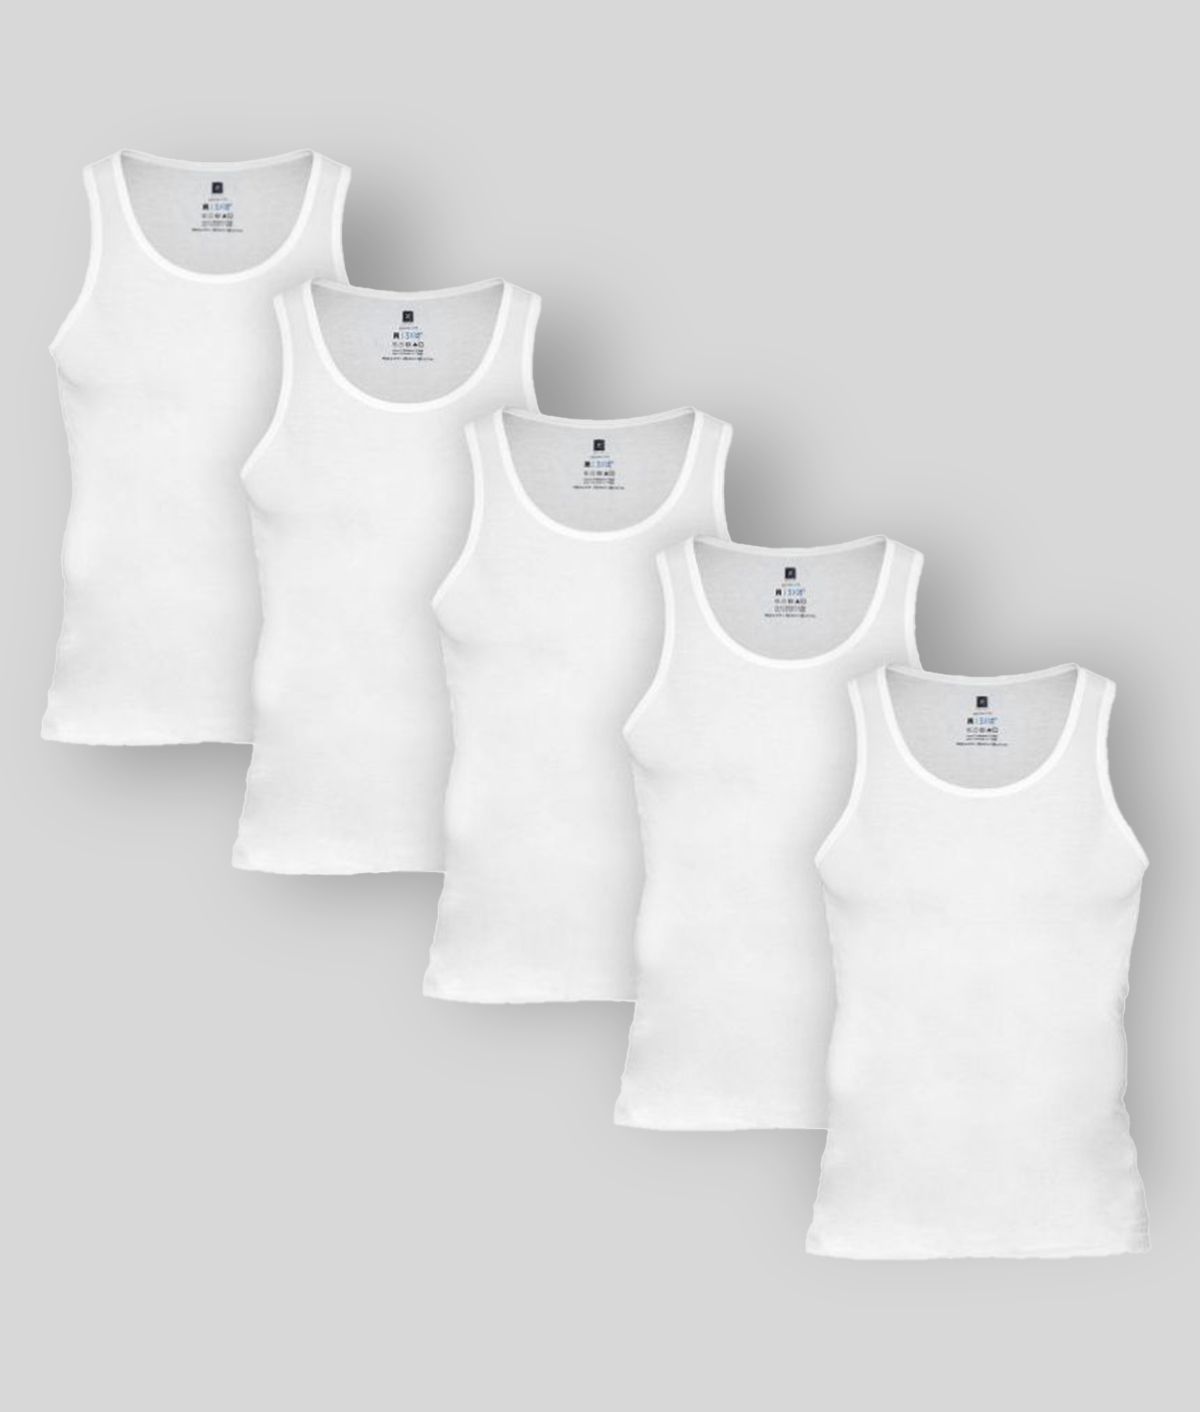     			XYXX - White Cotton Blend Men's Vest  ( Pack of 5 )